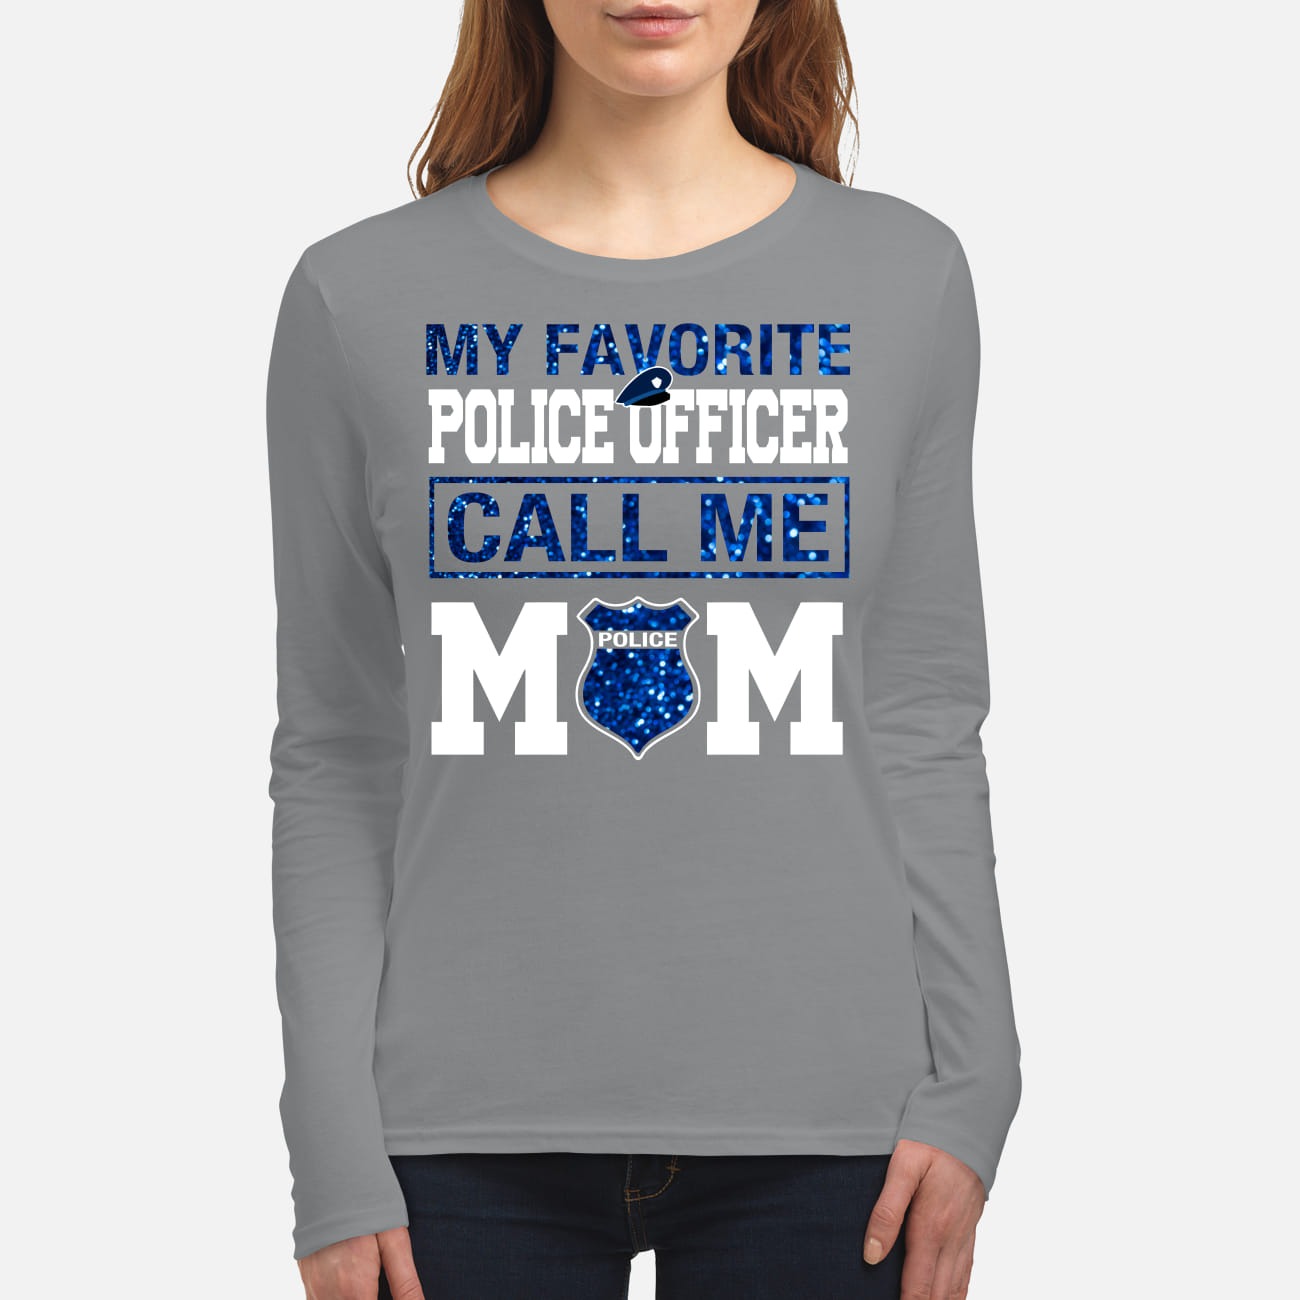 My favorite officer call me mom women's long sleeved shirt